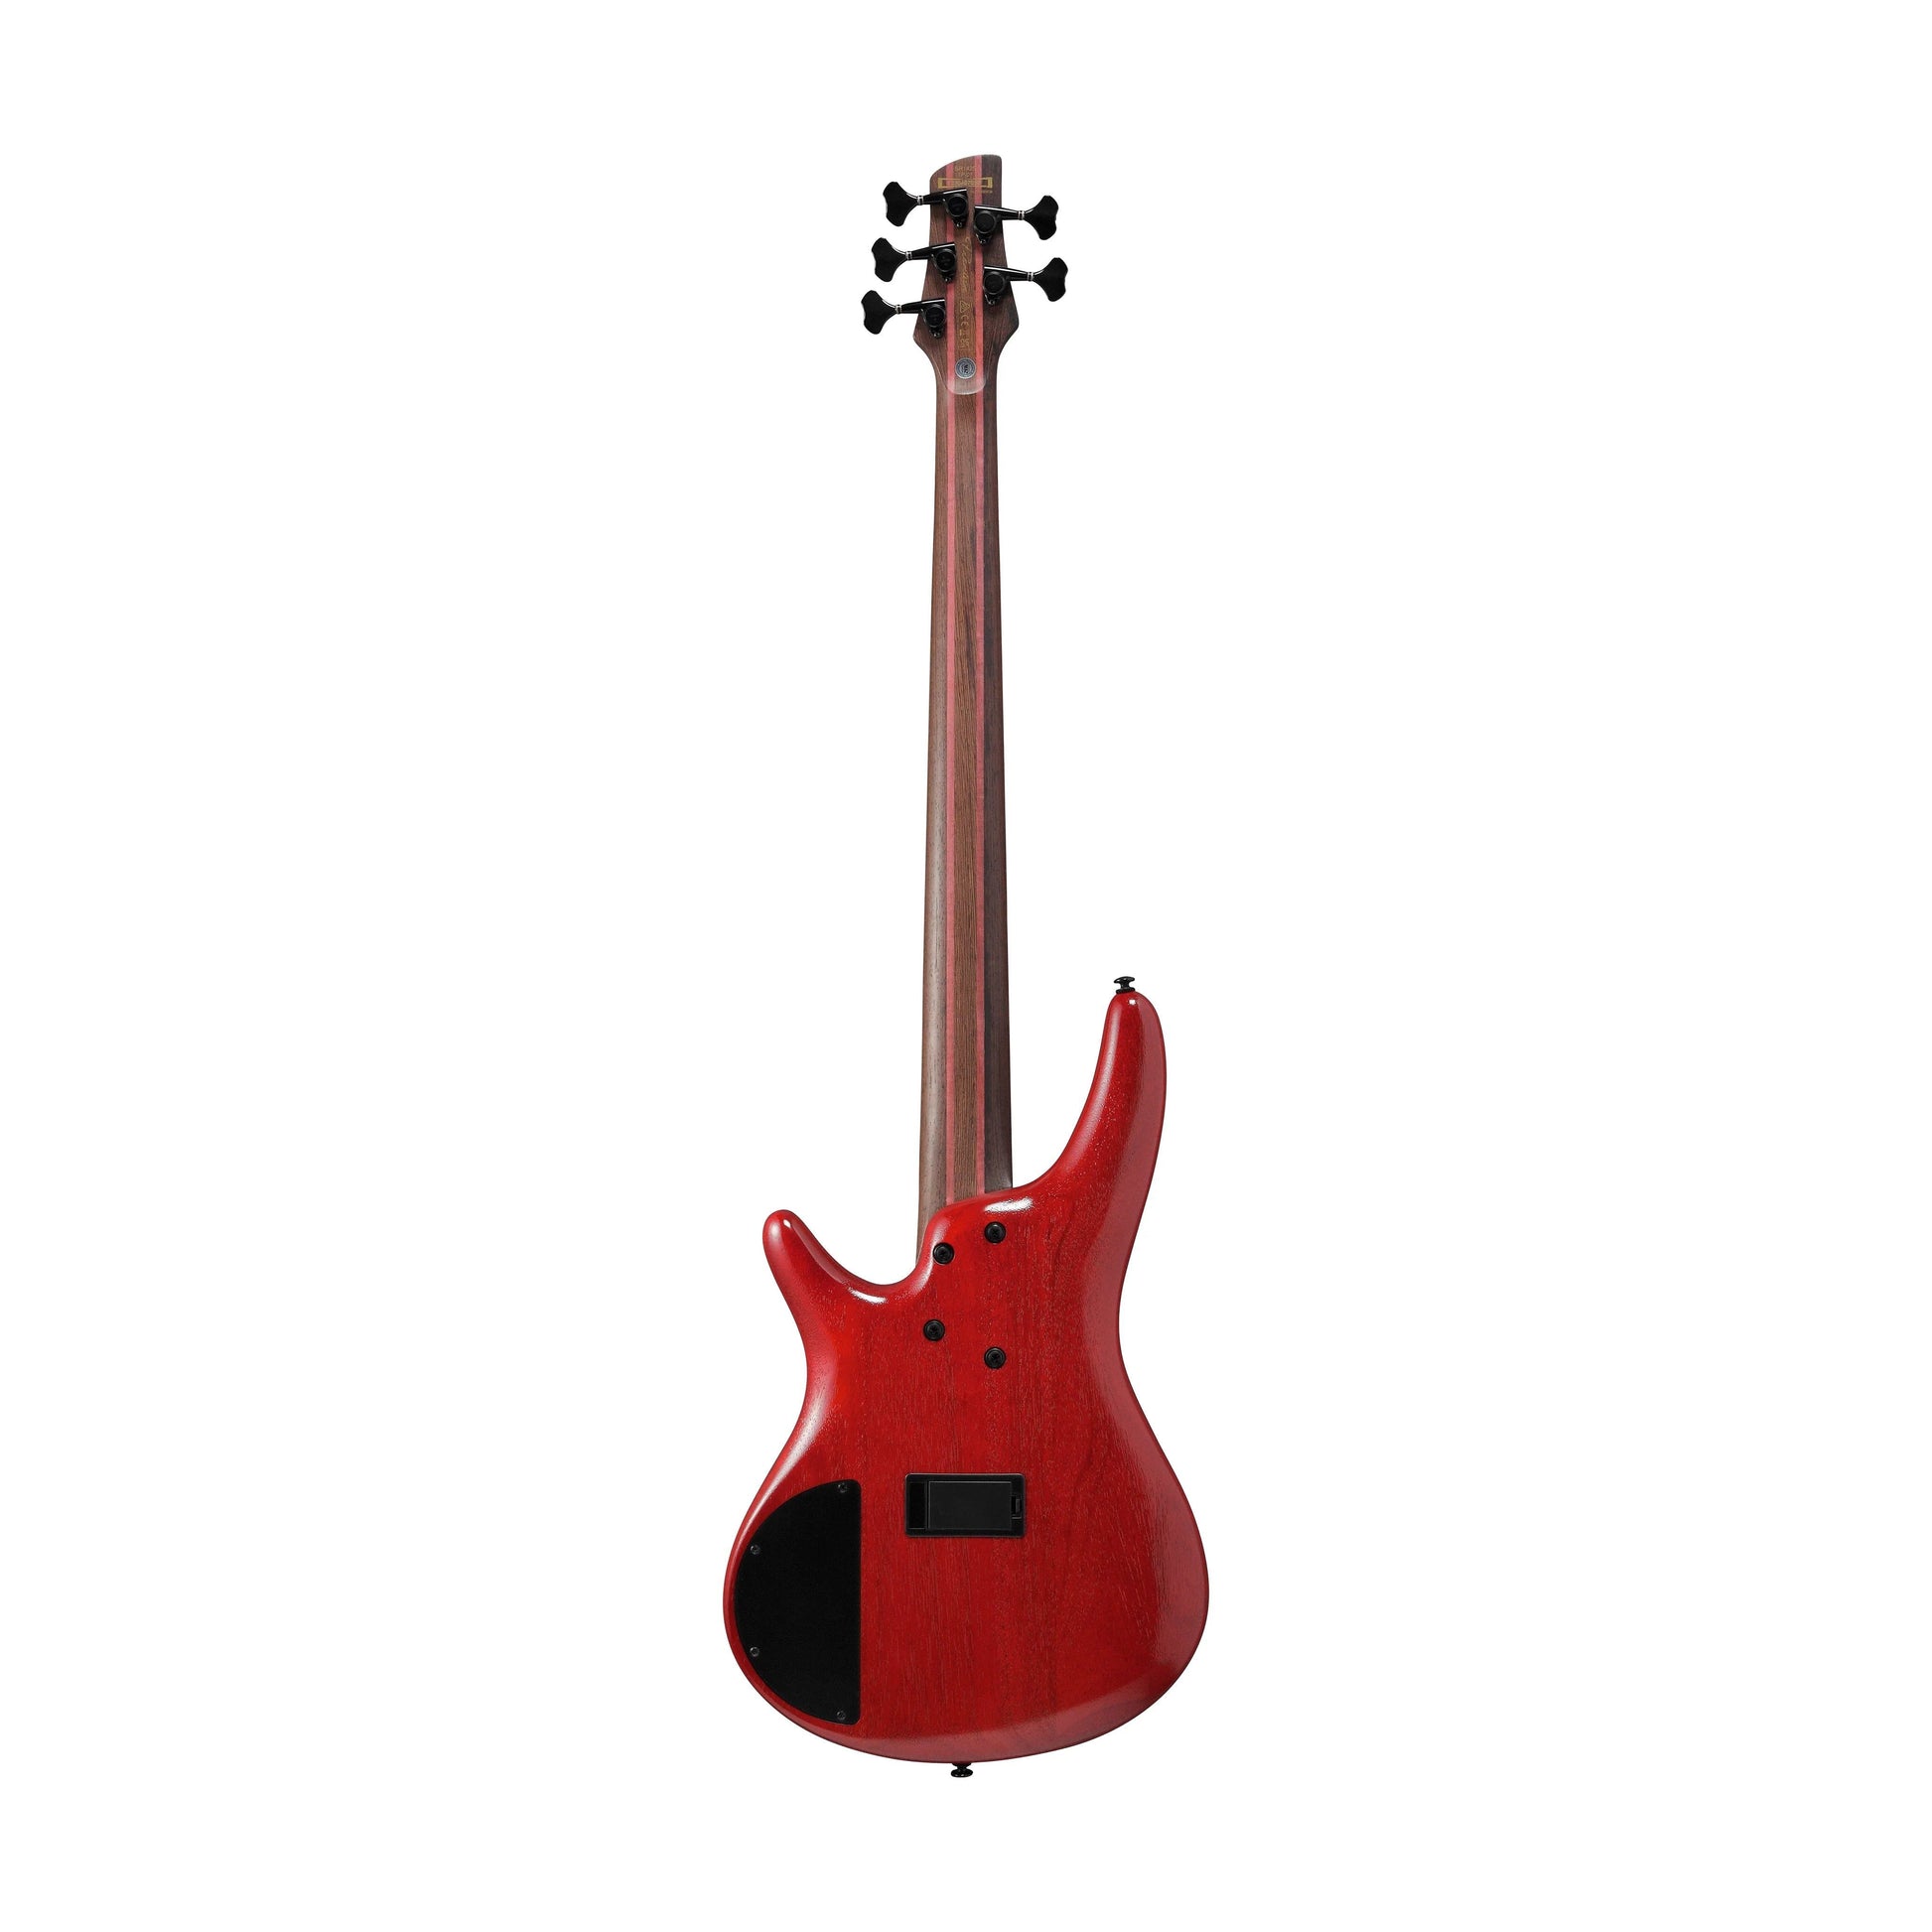 Đàn Guitar Bass Ibanez SR1425B - SR Premium, Caribbean Green Low Gloss - 5 Strings - Việt Music